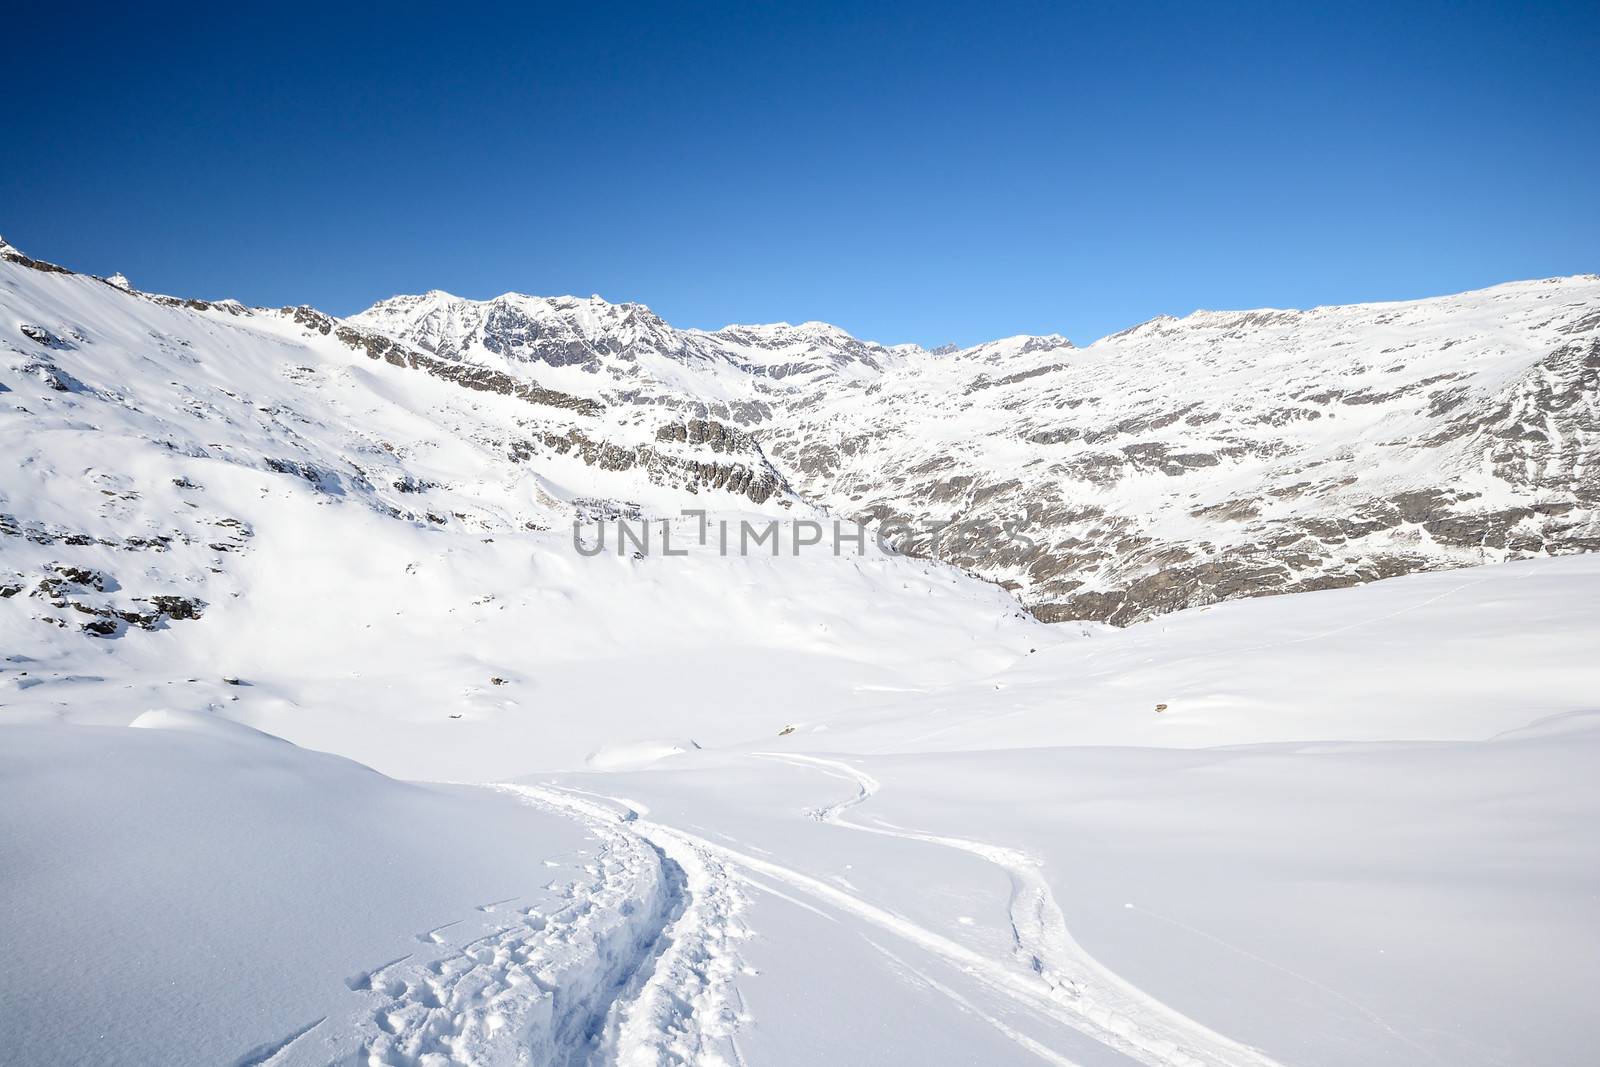 Tour ski tracks on snowy slope in winter scenic landscape